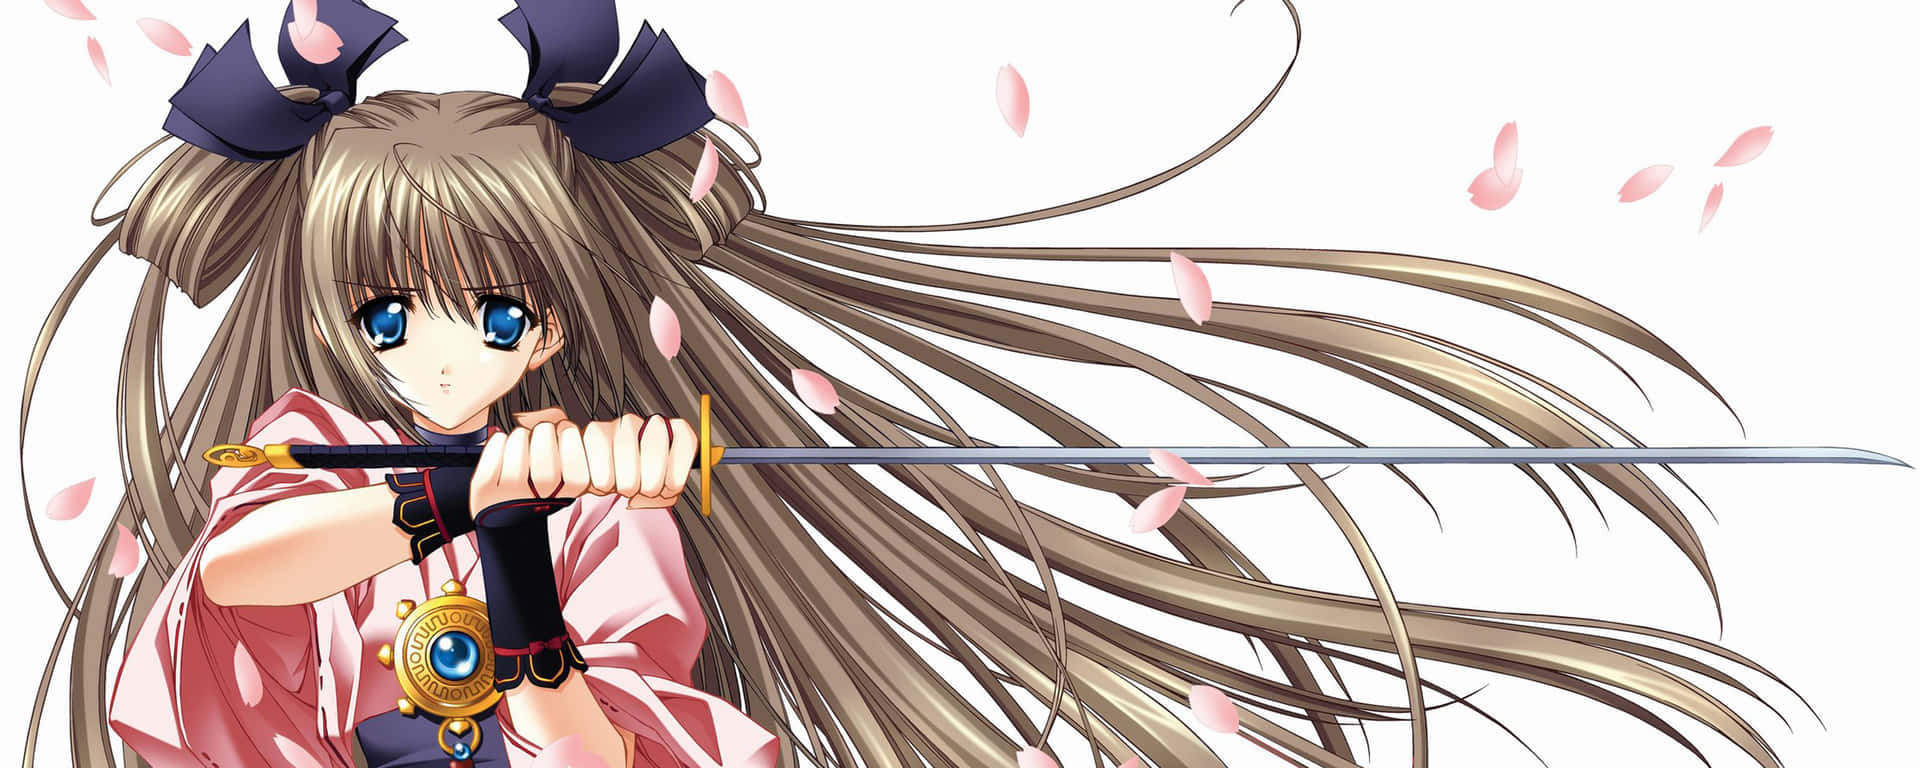 Dual Monitor Anime Girl Sword Wallpaper